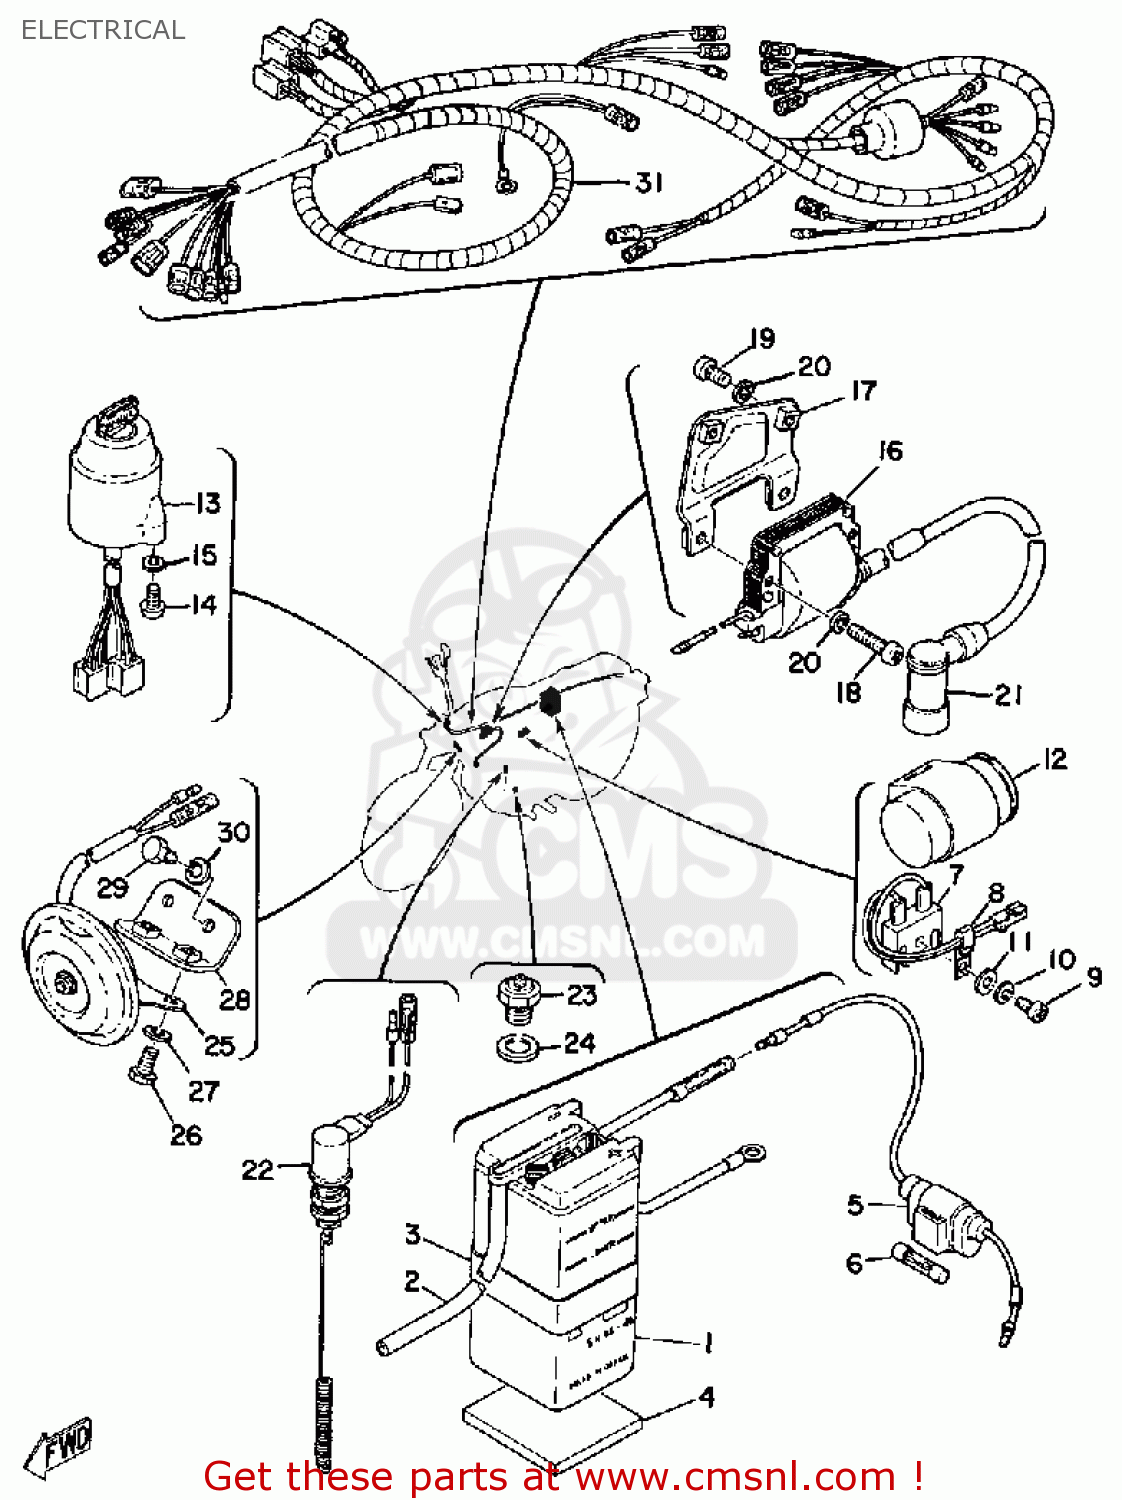 Yamaha Rs 100 Cdi Wiring Diagram